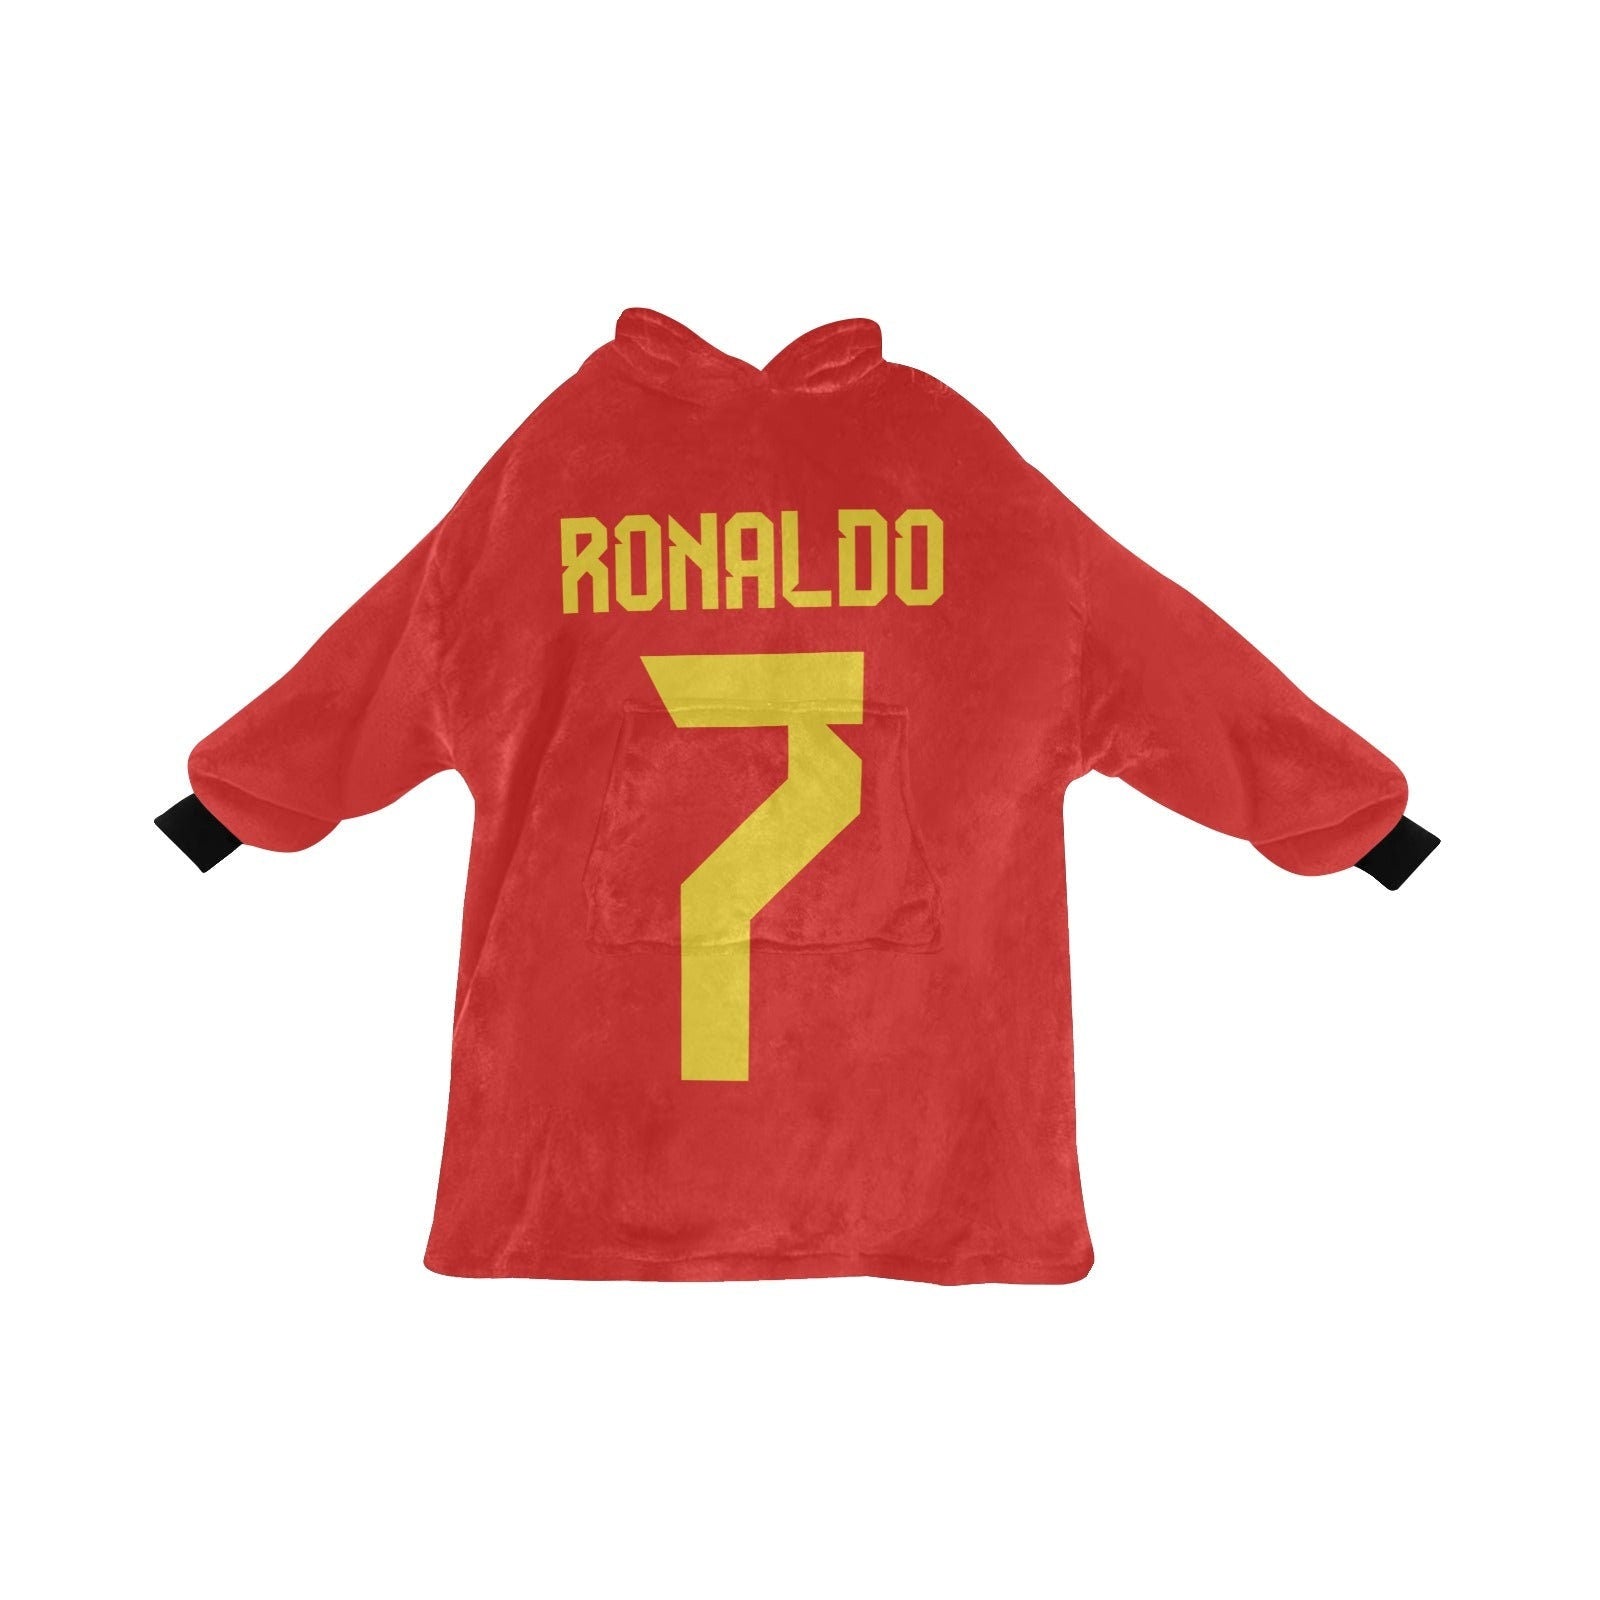 ronaldo jersey fifa world cup